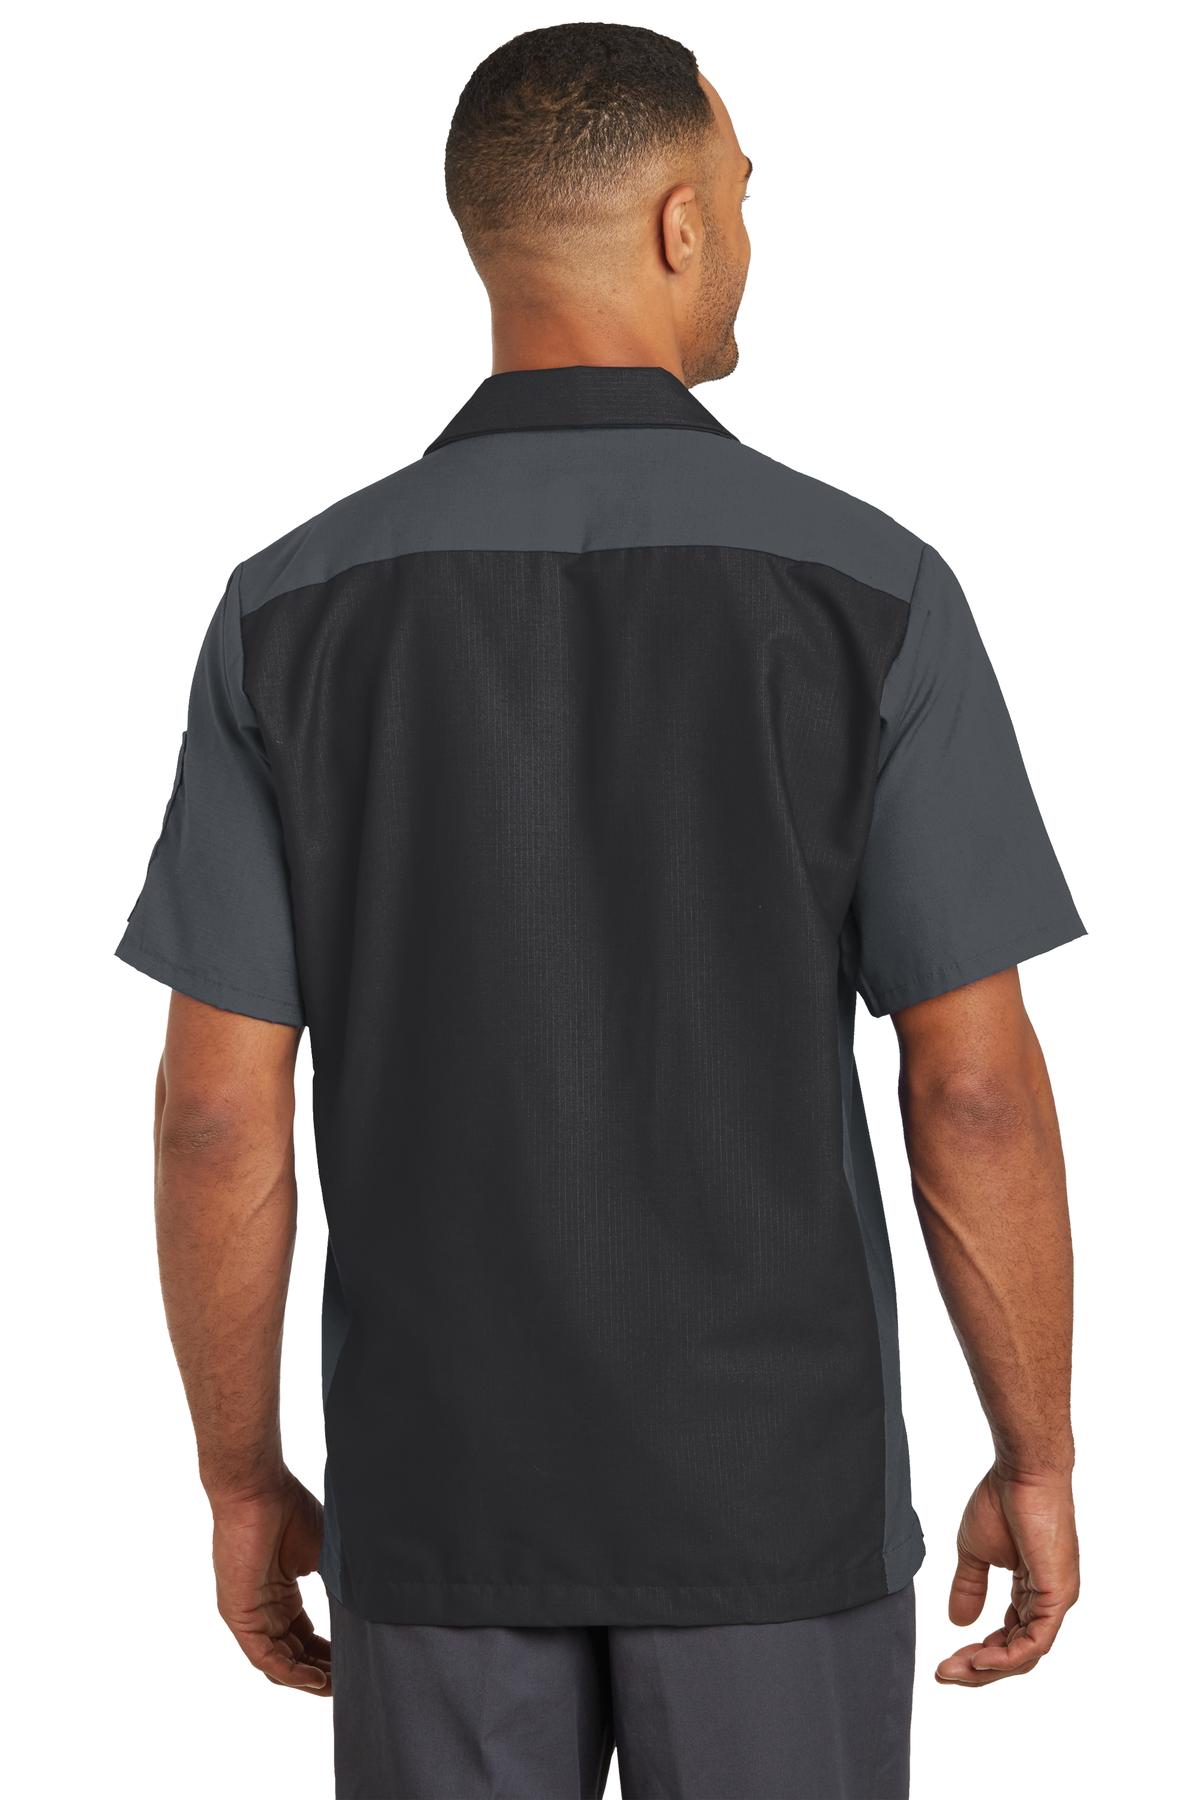 Red Kap Short Sleeve Ripstop Crew Shirt. SY20